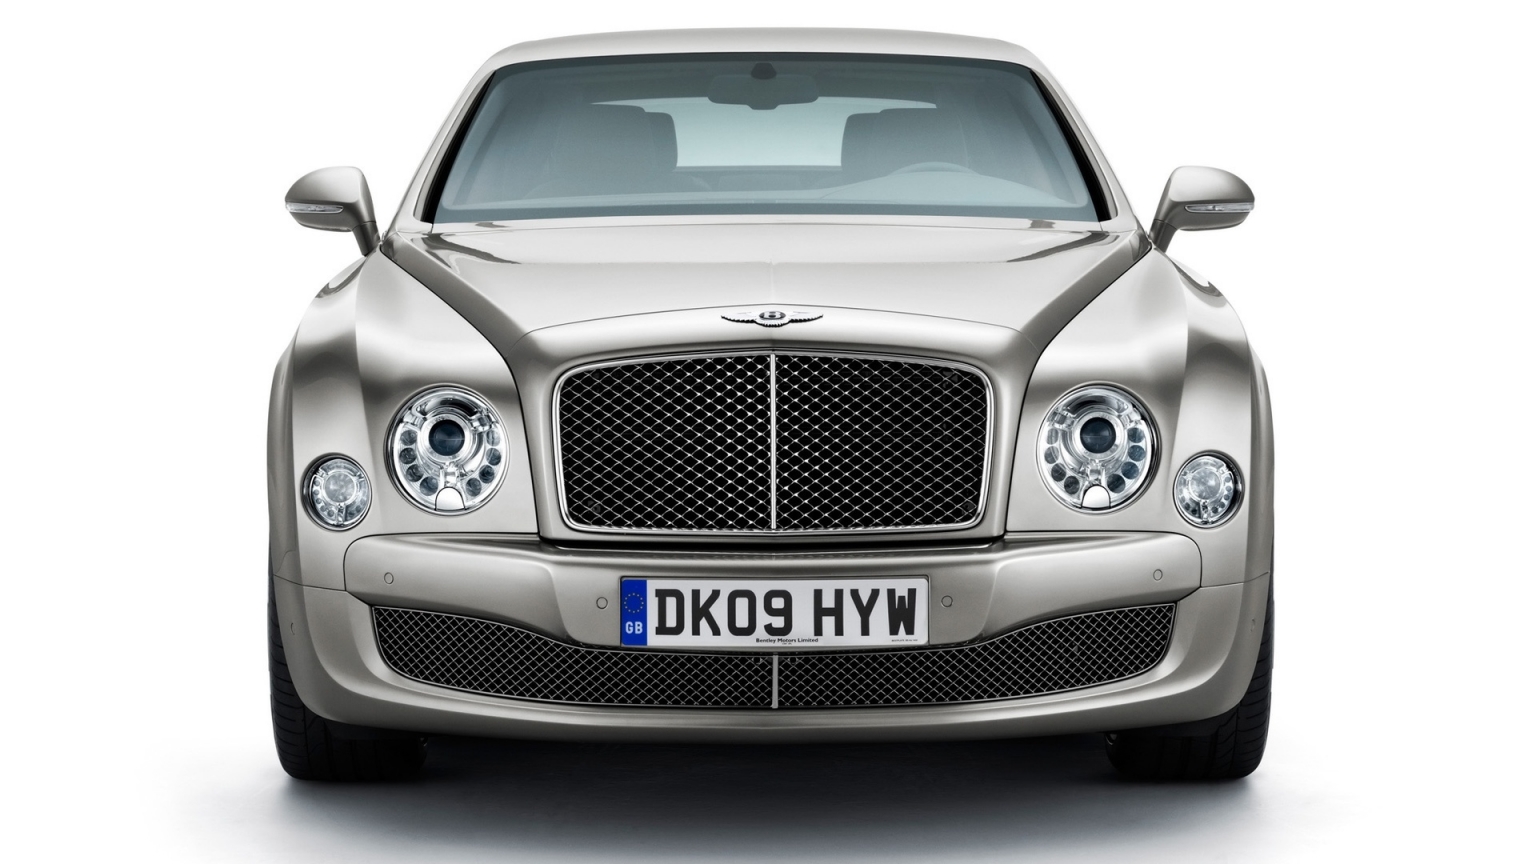 2010 Bentley Mulsanne Front for 1536 x 864 HDTV resolution